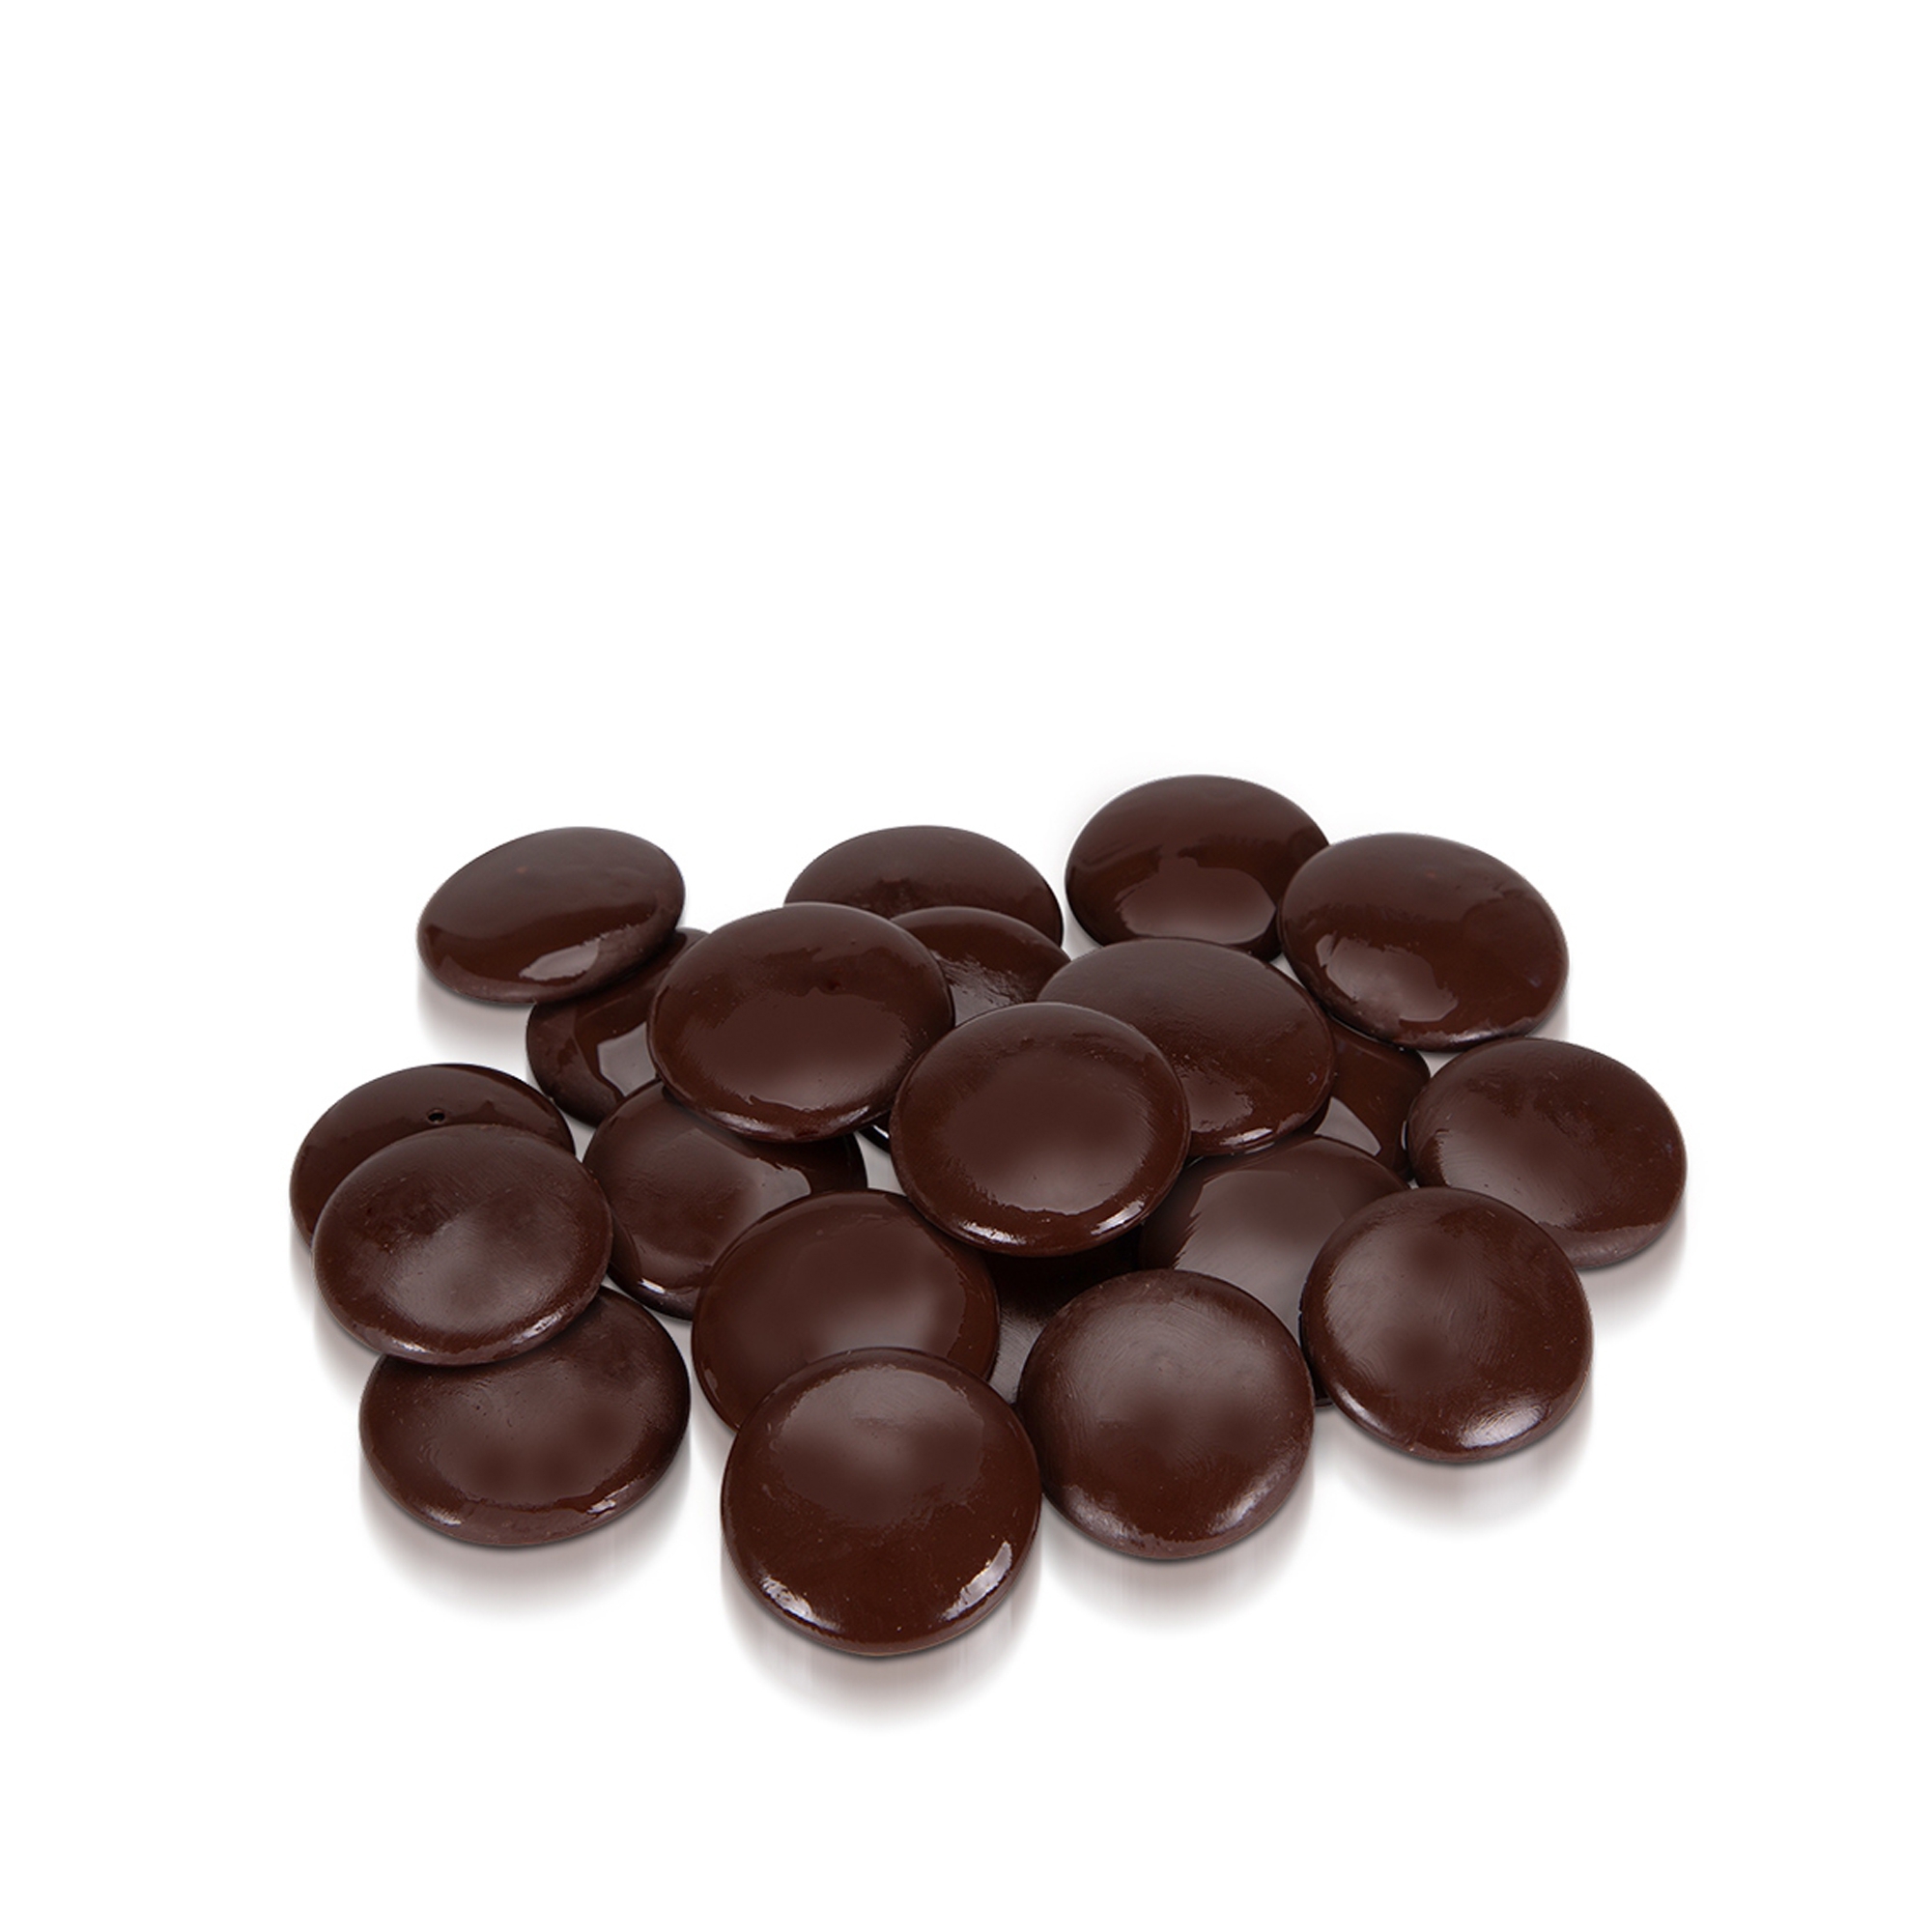 Städter - Kuvertüre Edel-Schokolade Drops 500 g